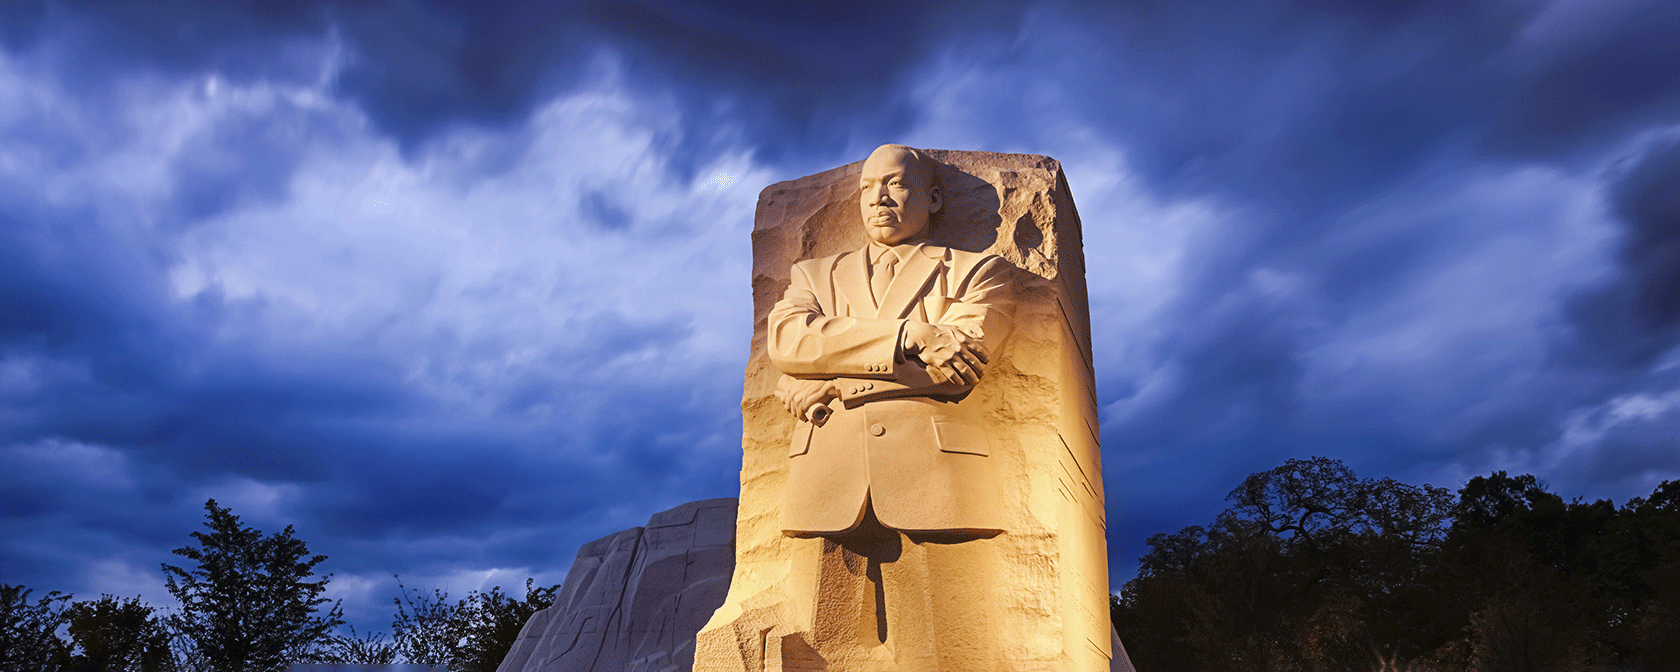 Martin Luther King Jr. Memorial at night